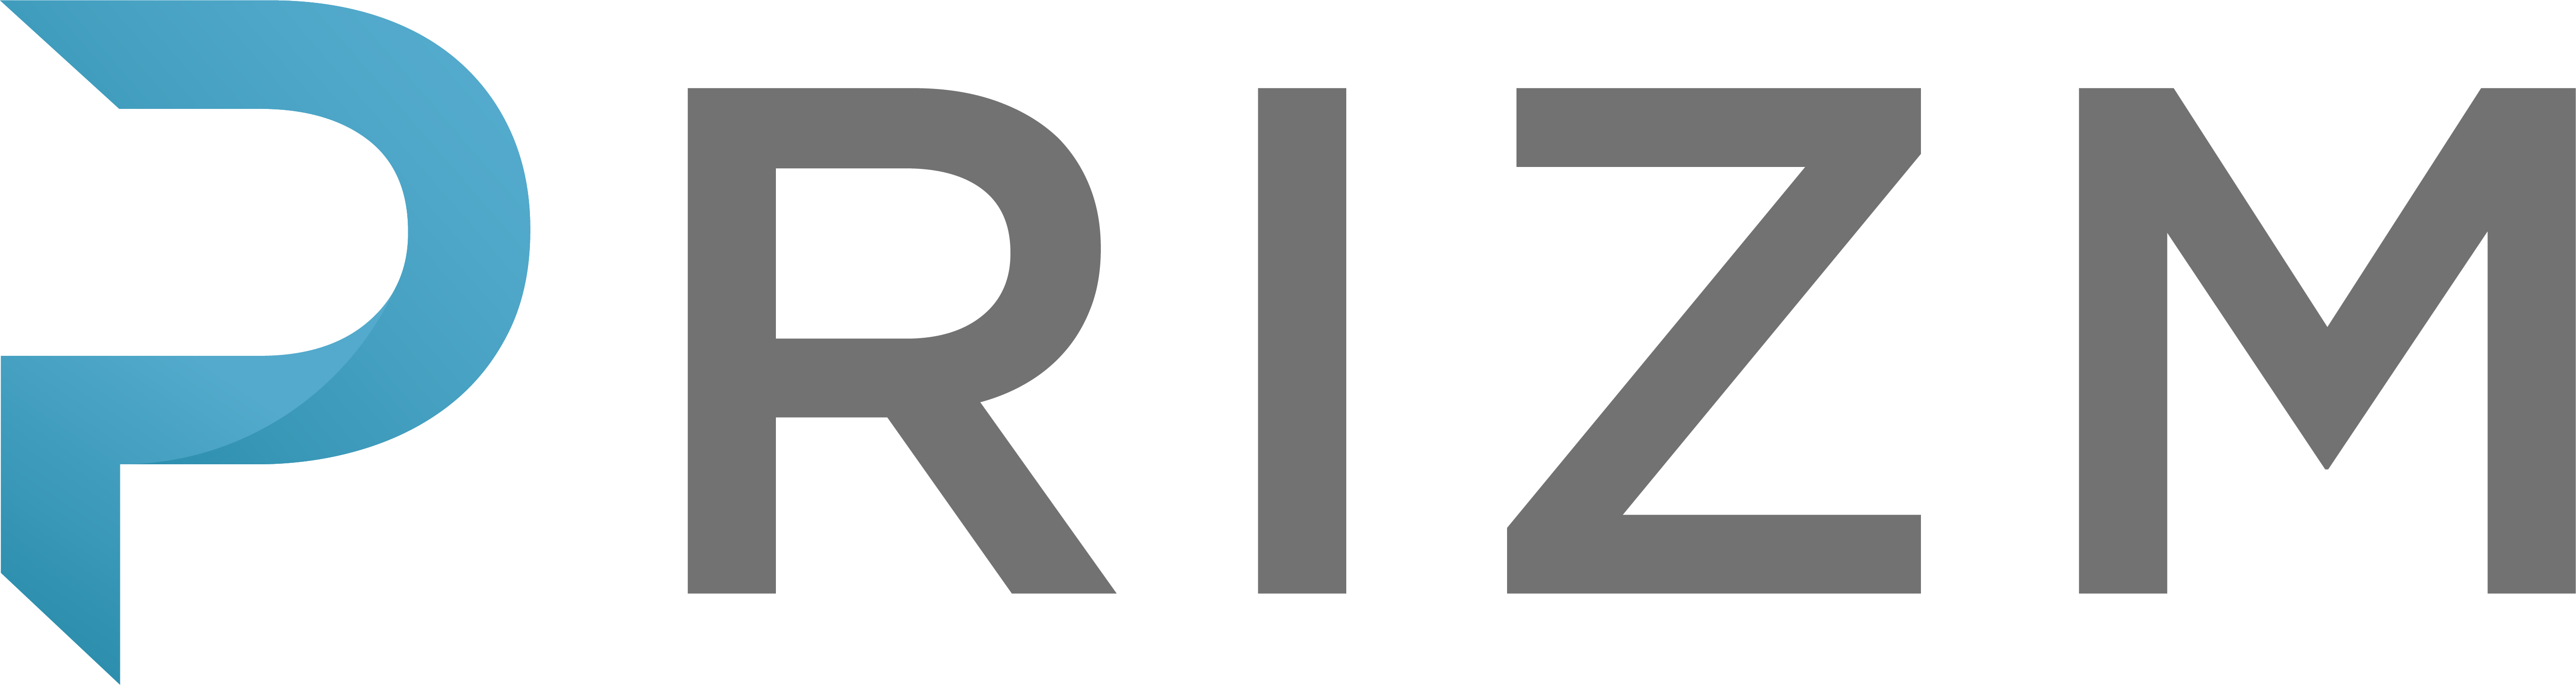 Dealer Inspire PRIZM Logo